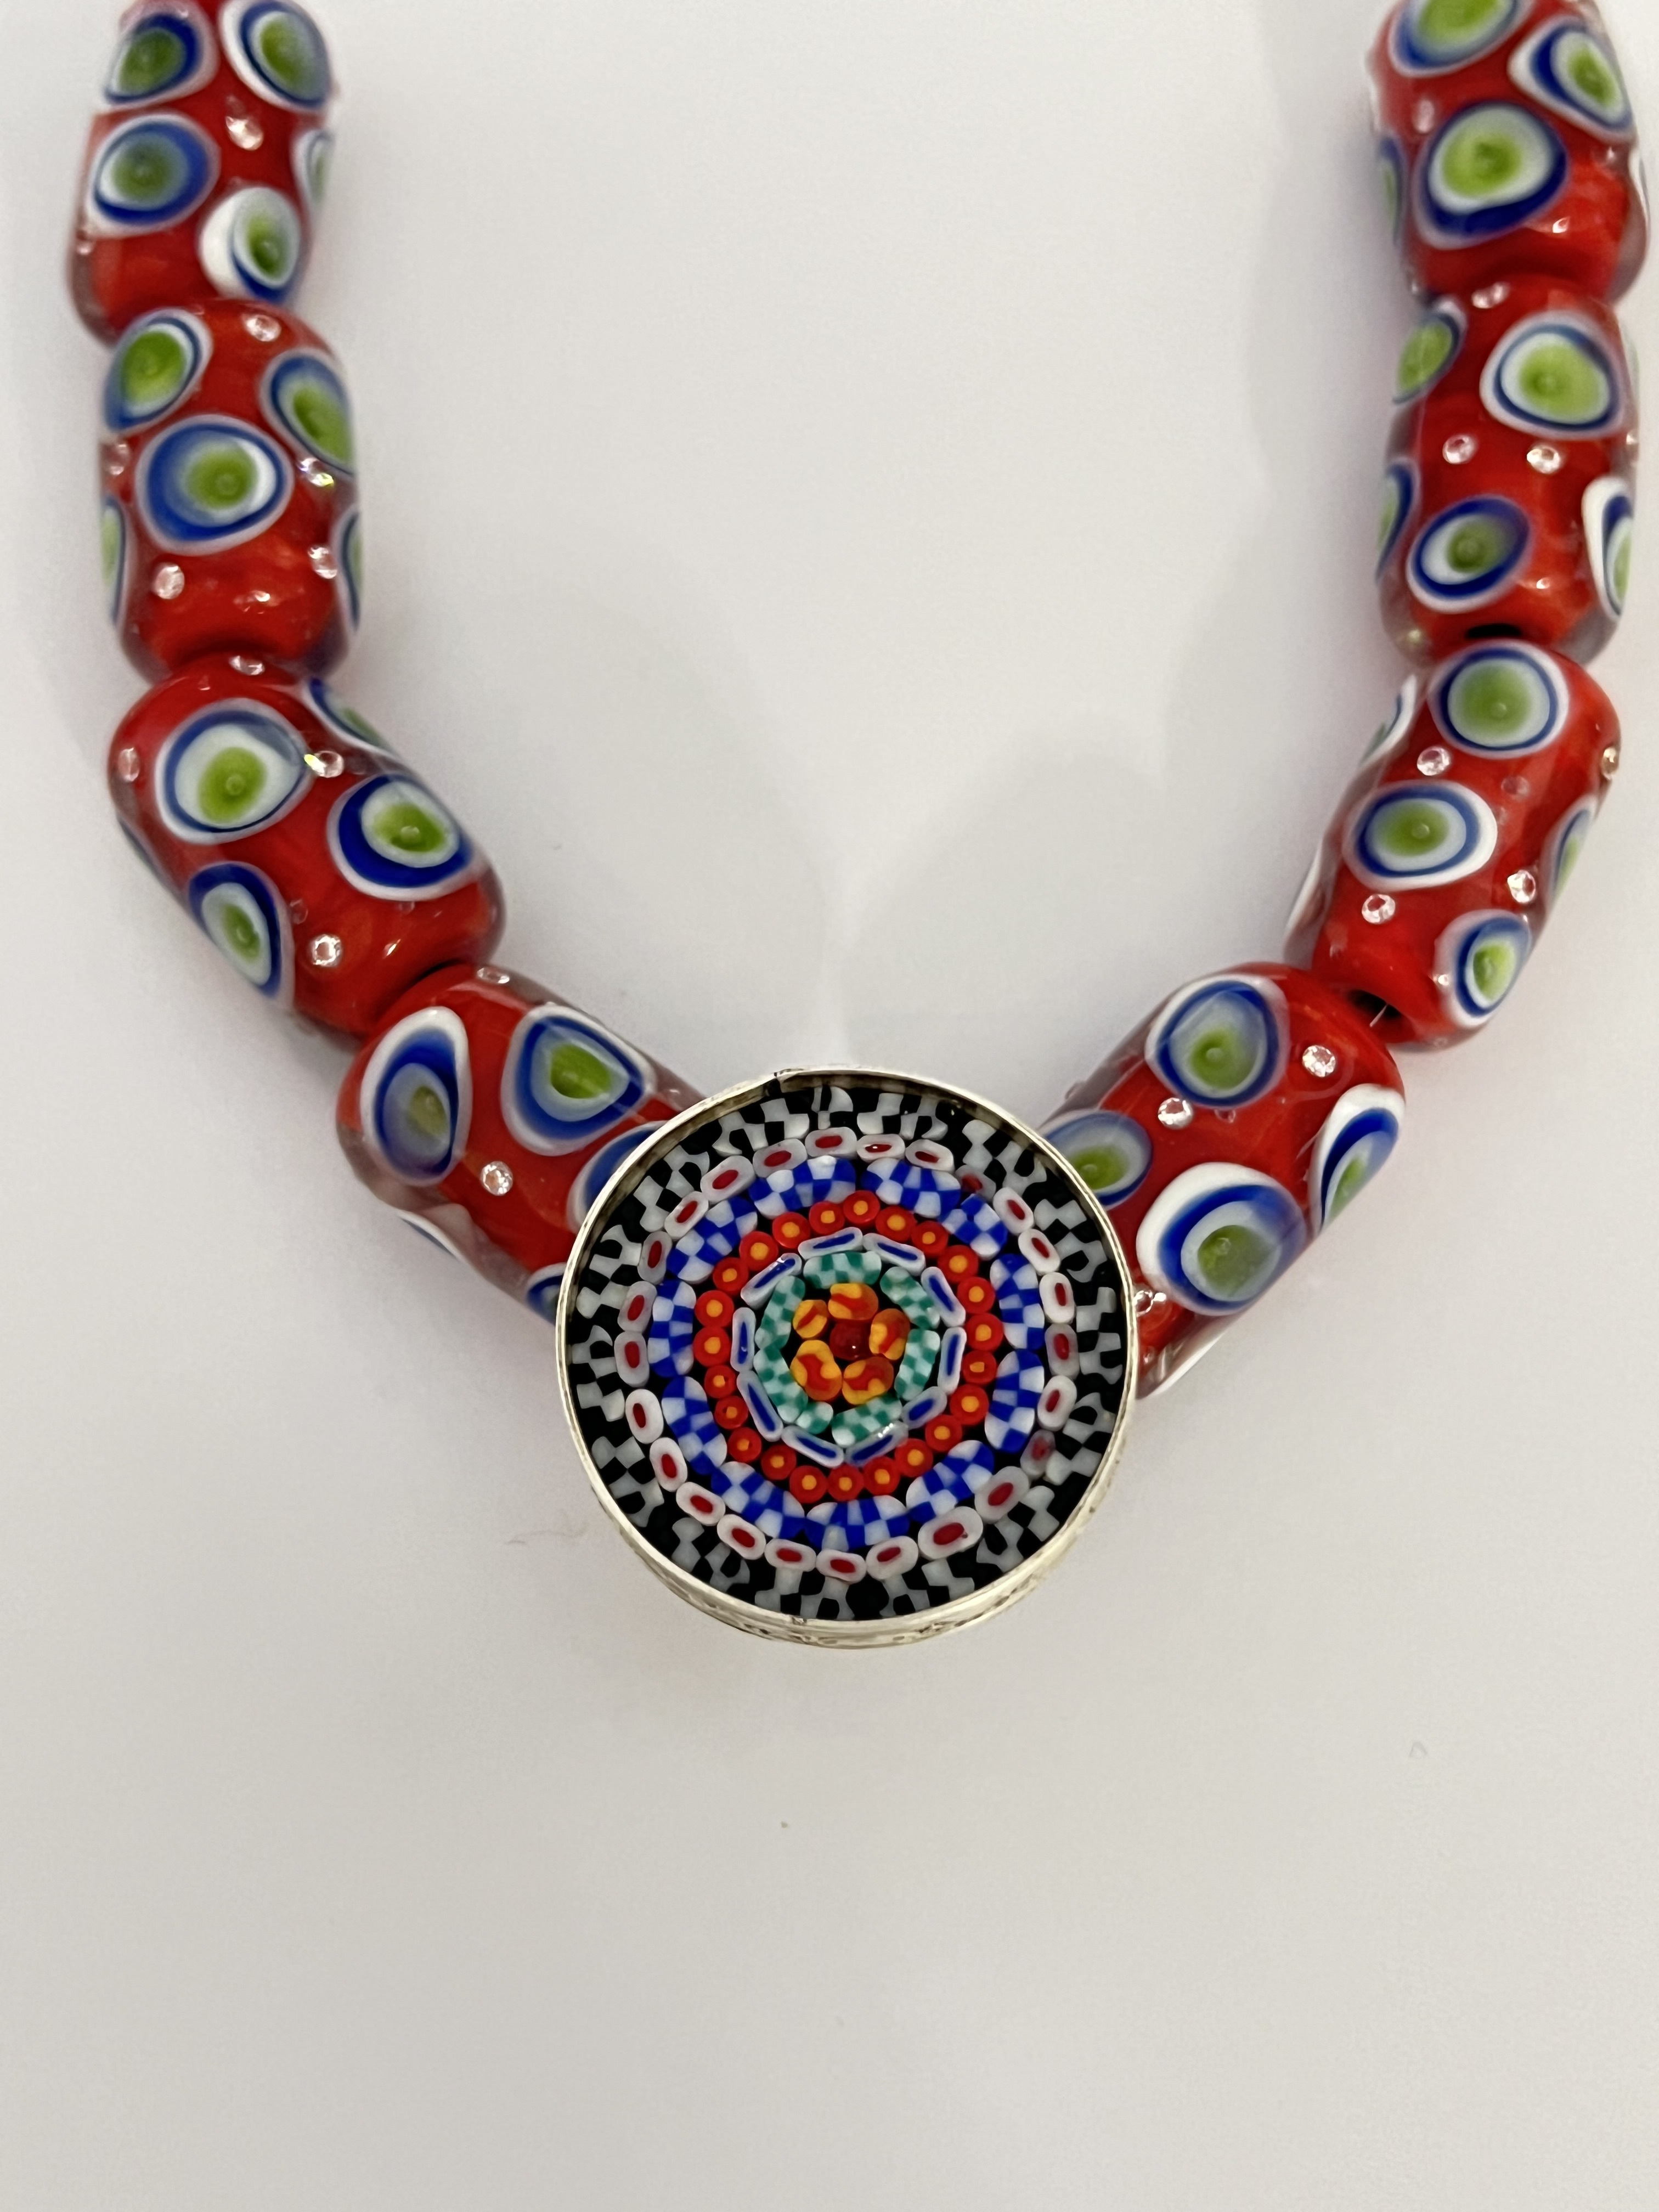 Mosaic pattern neckpiece